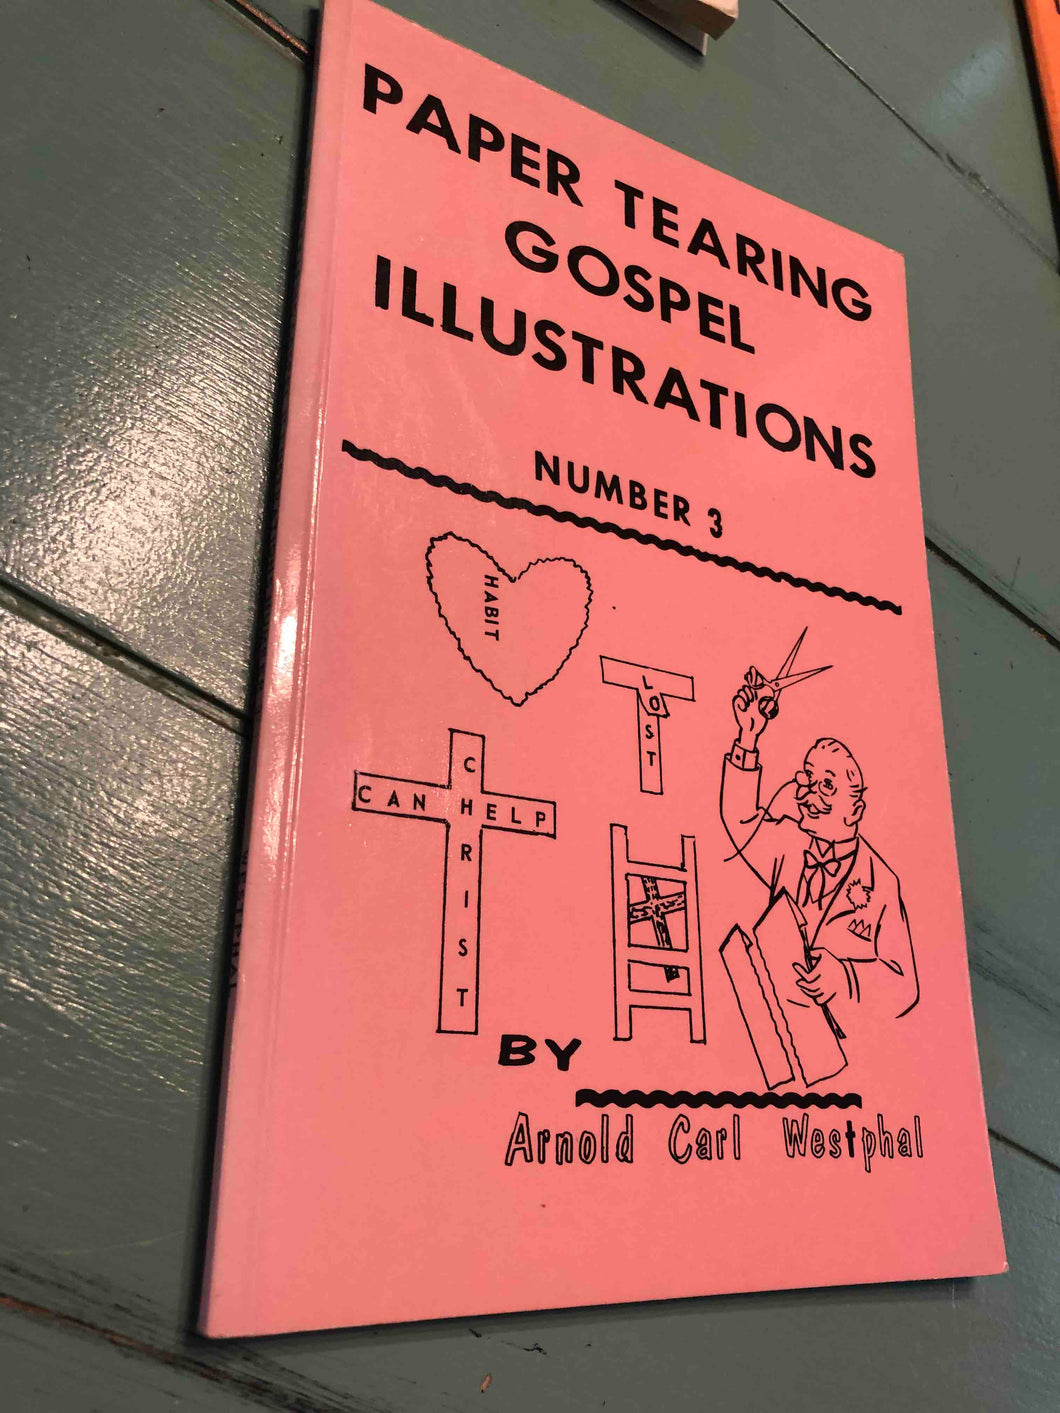 Paper Tearing Gospel Illustrations No. 3 By Arnold Carl Westphal